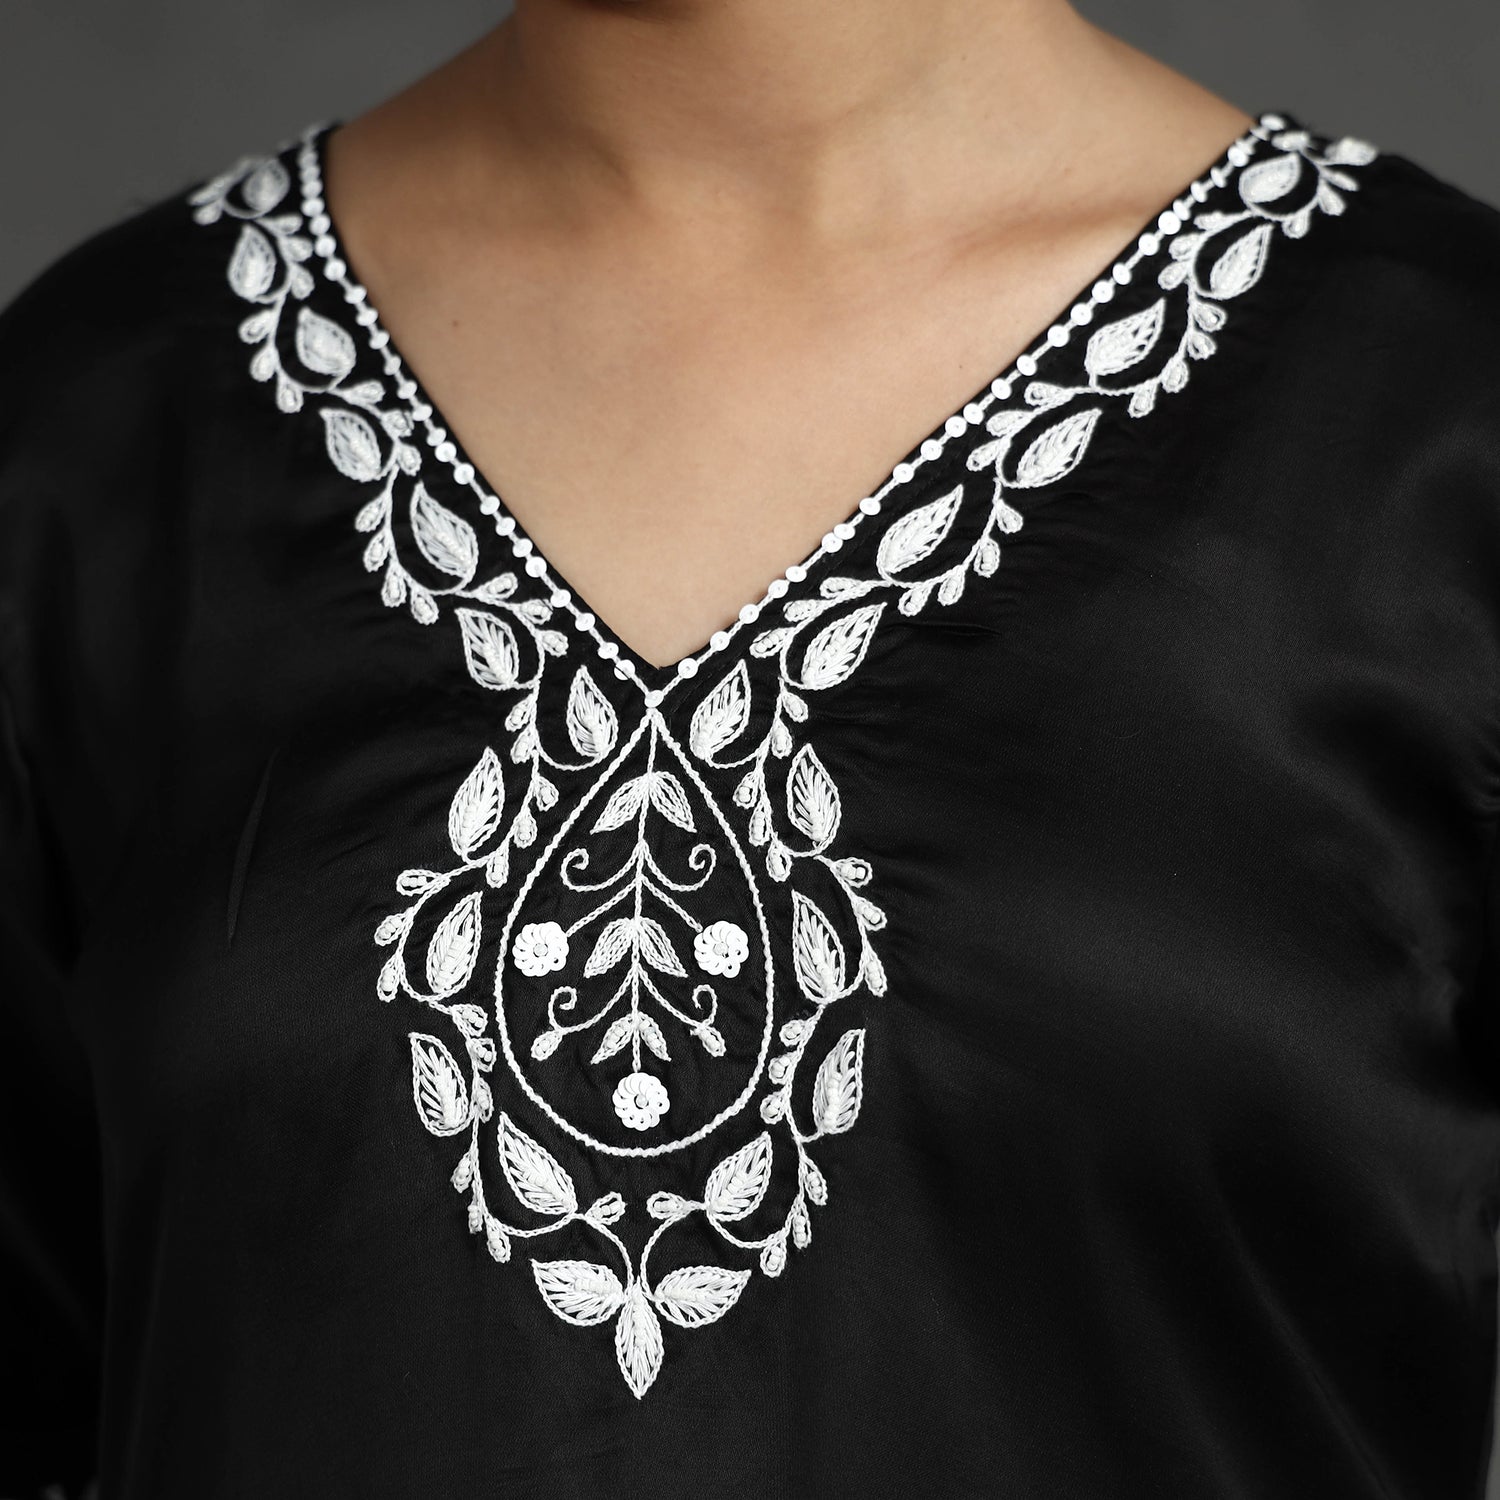 Black Modal Silk Noori Hand Embroidery Long Straight Kurta